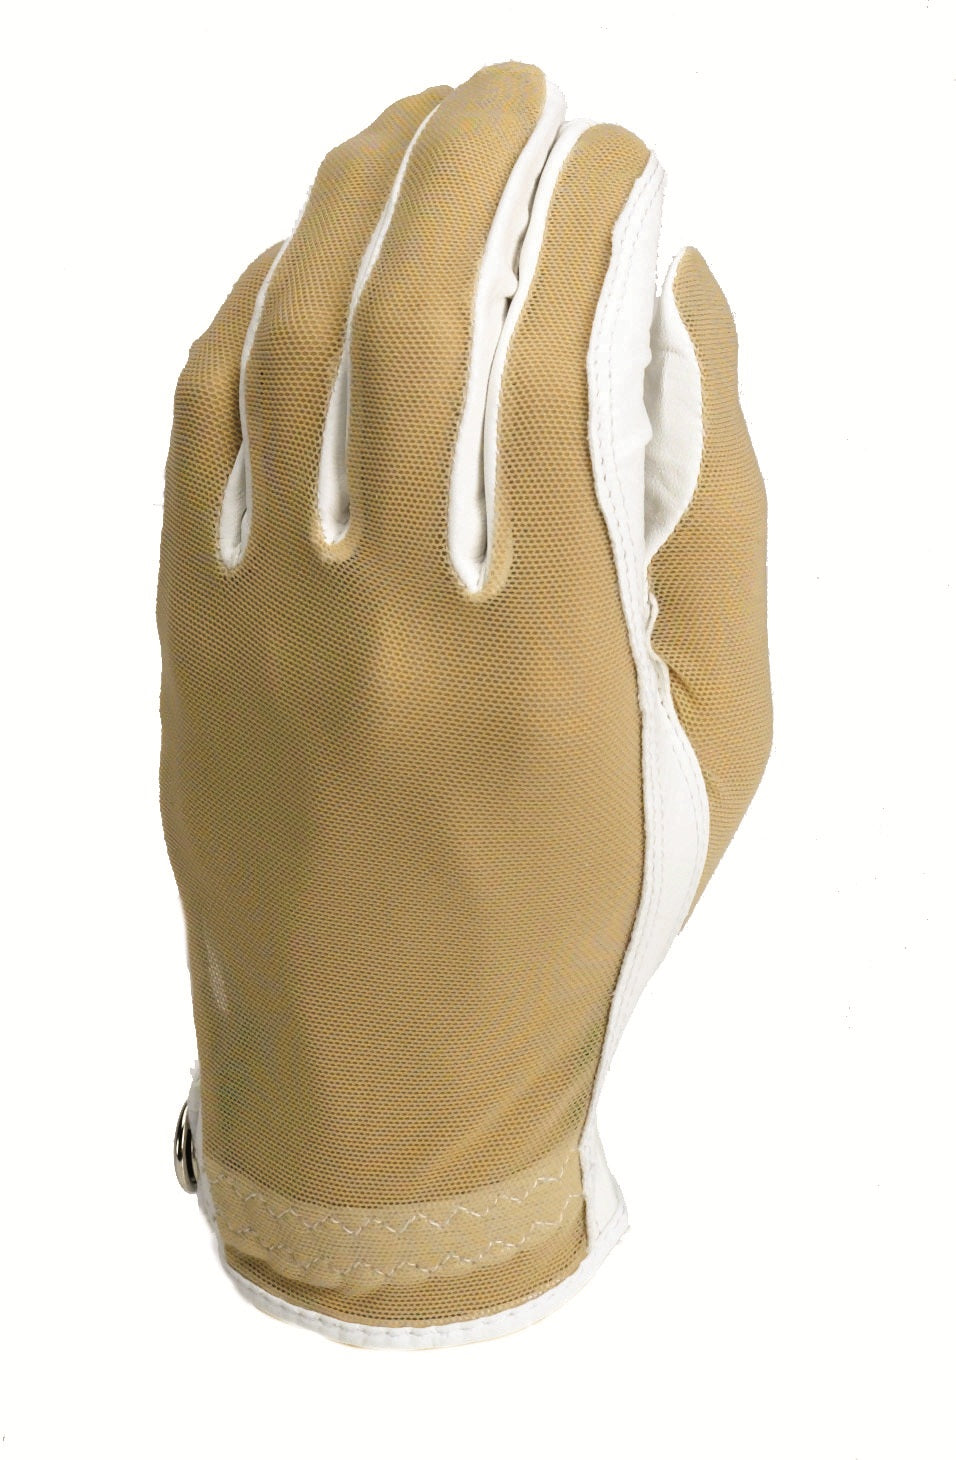 Evertan- Bare Golf Glove (for LeftHand)